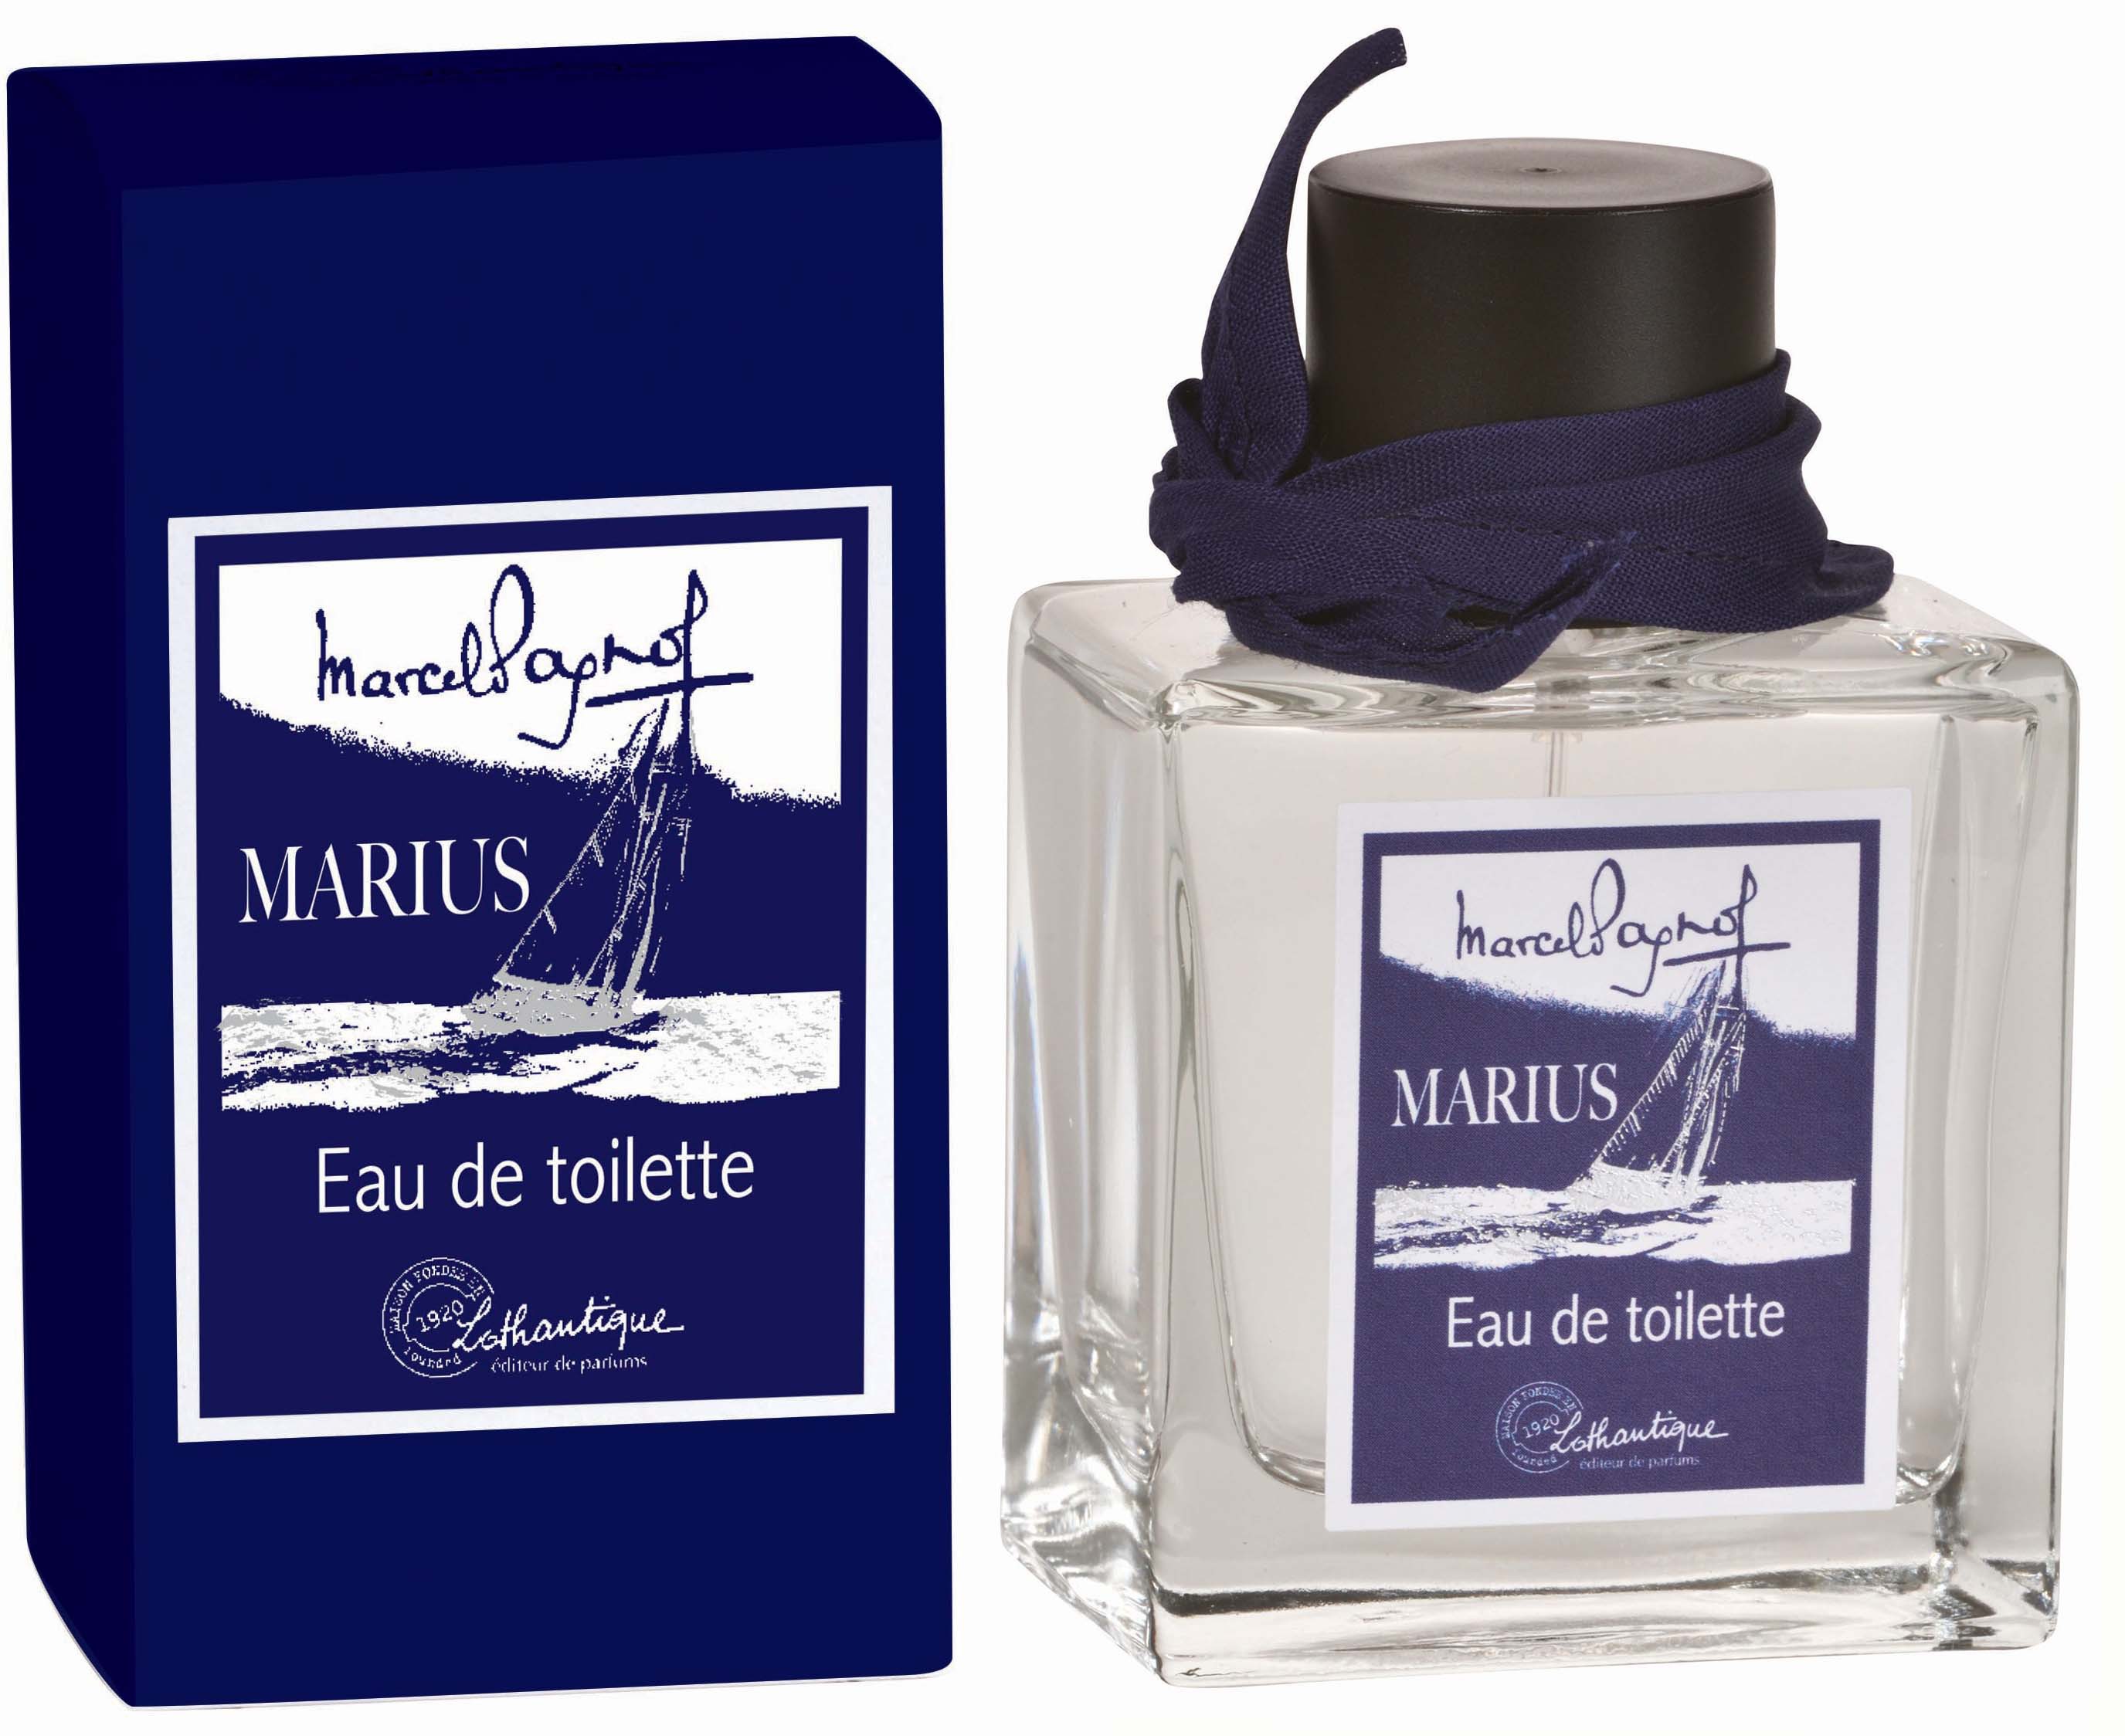 Terre De Feu NeZ ZeN perfume - a fragrance for women and men